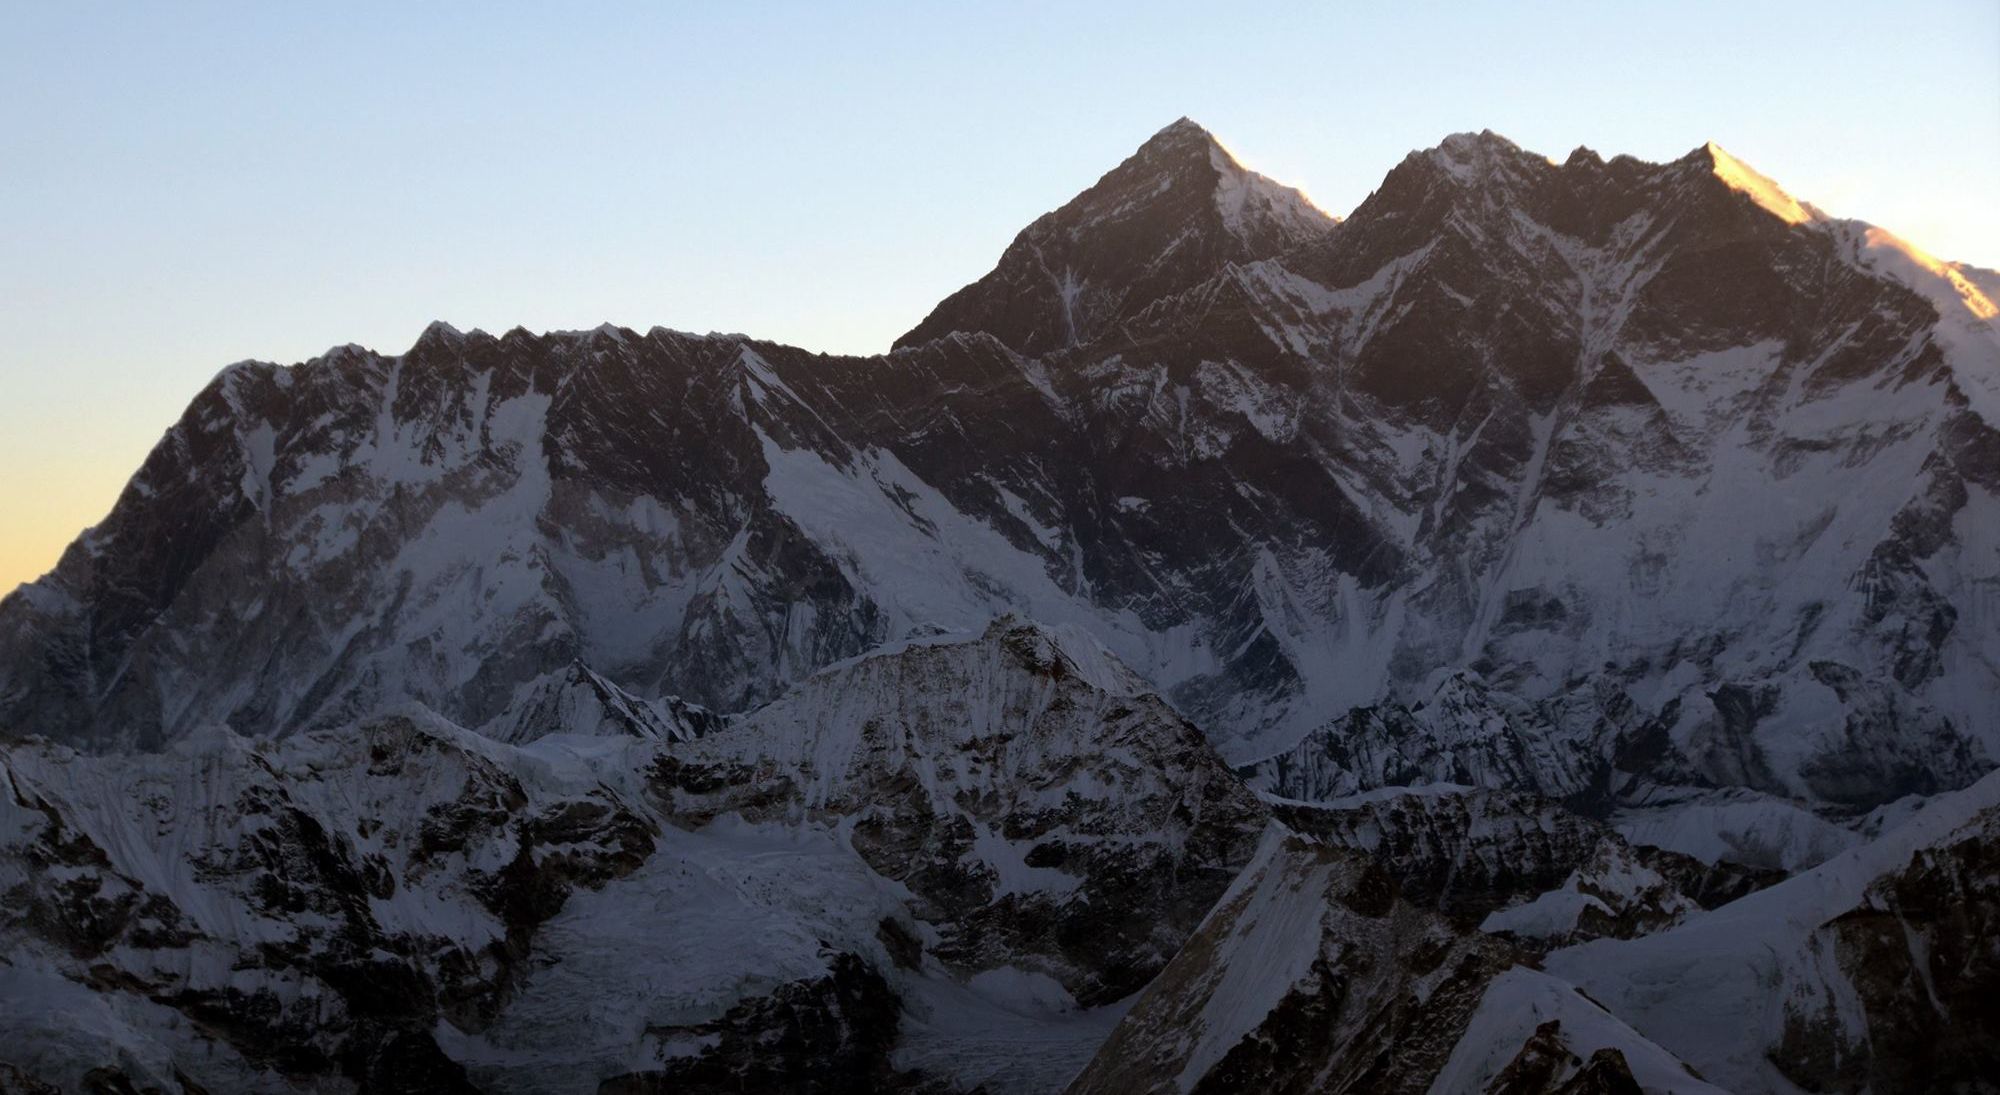 Nuptse, Everest and Lhotse